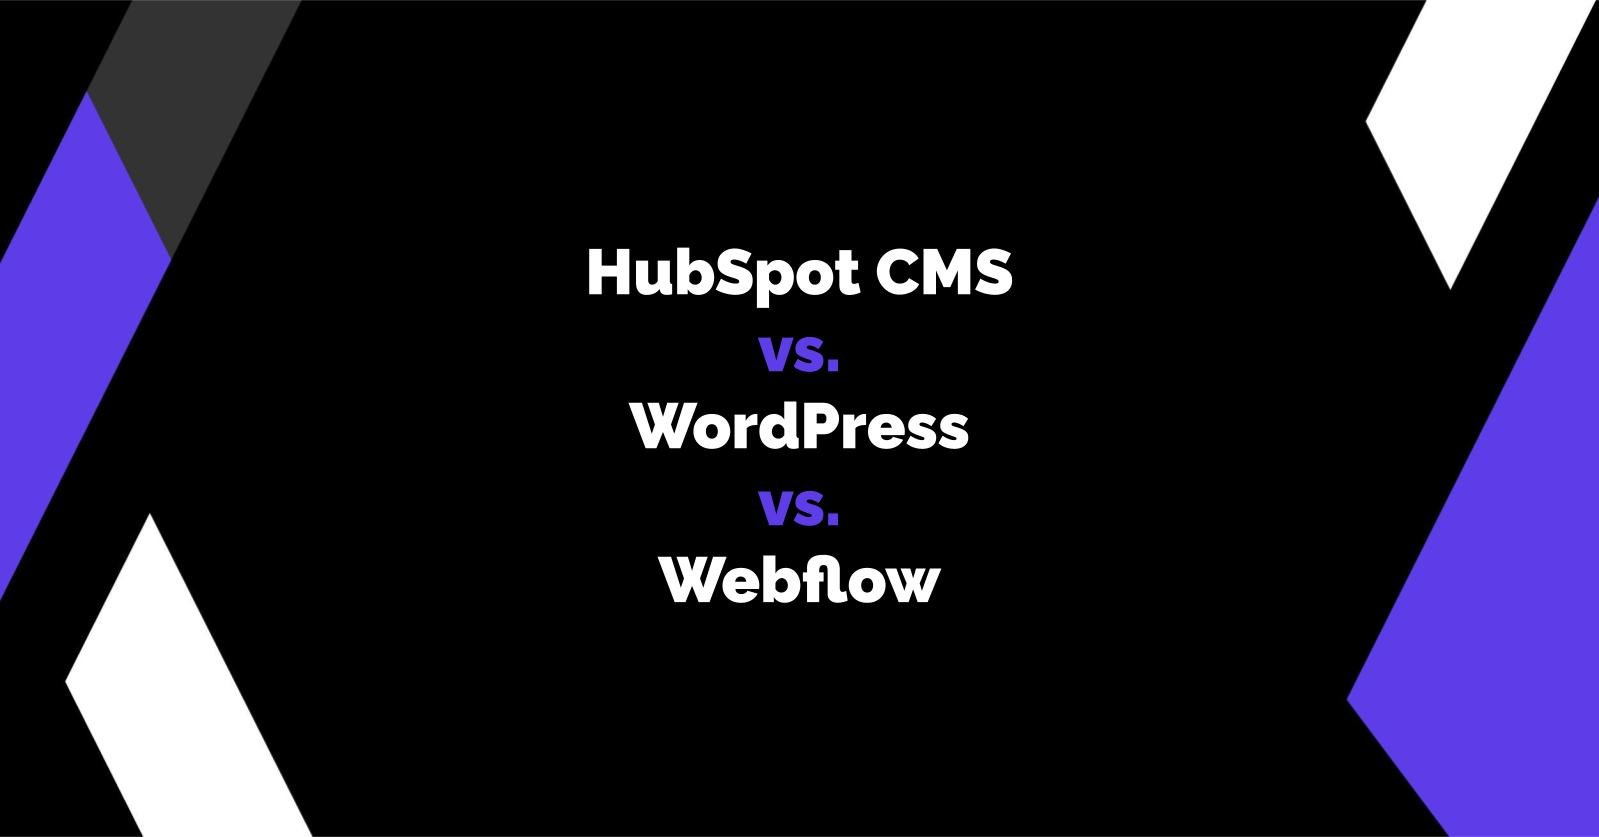 HubSpot CMS vs. WordPress vs. Webflow